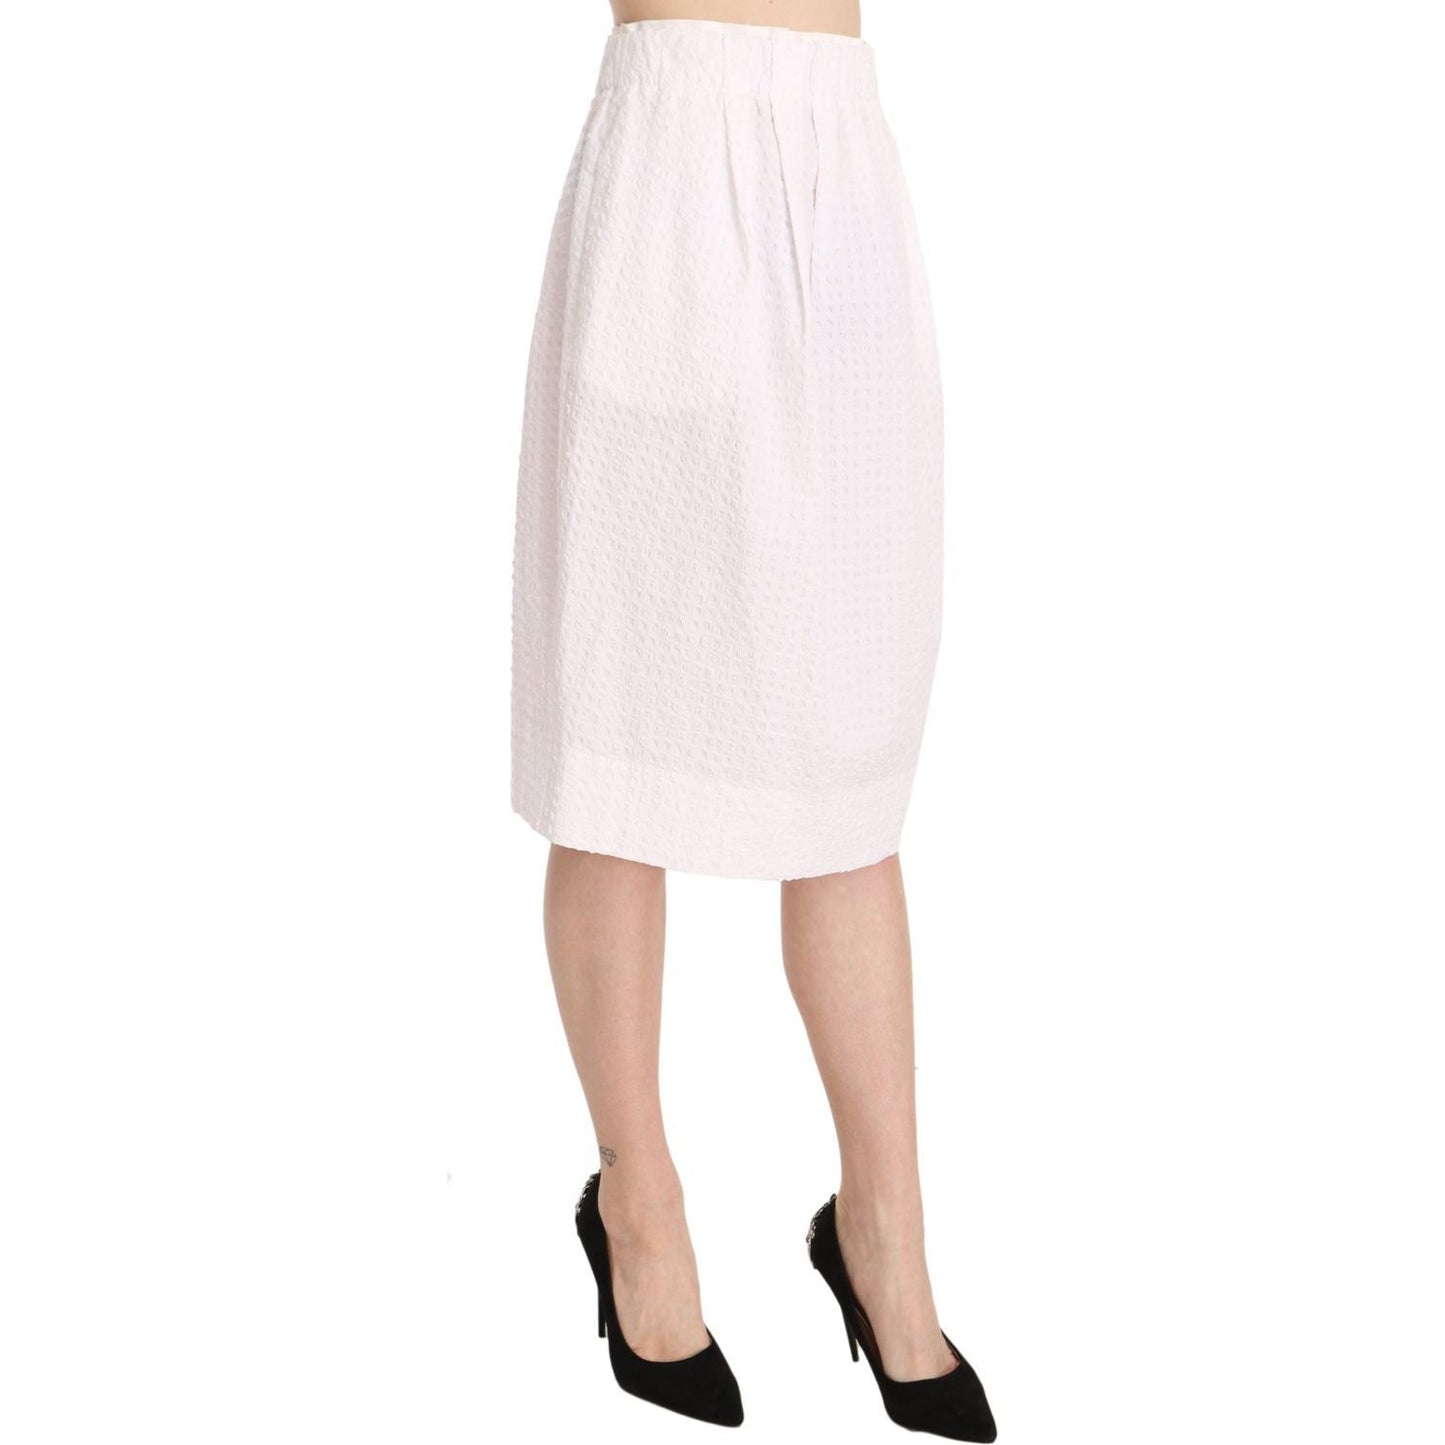 L'Autre Chose Elegant White Pencil Skirt white-jacquard-plain-weave-stretch-midi-skirt